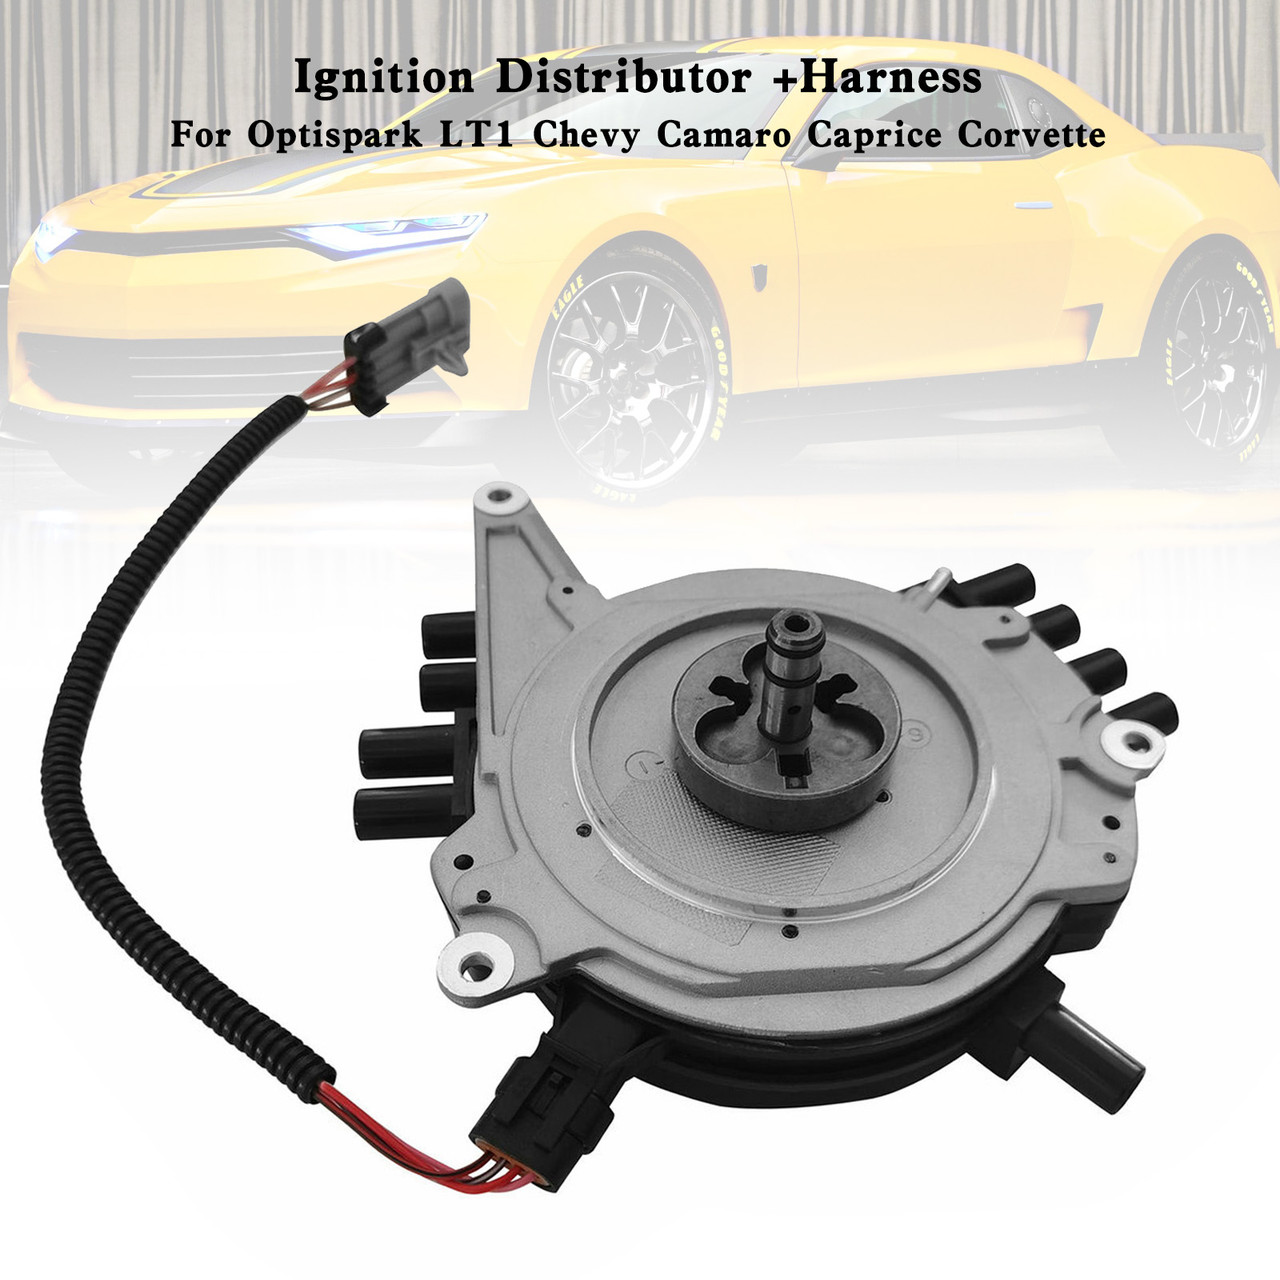 Ignition Distributor +Harness For Optispark LT1 Chevy Camaro Caprice Corvette